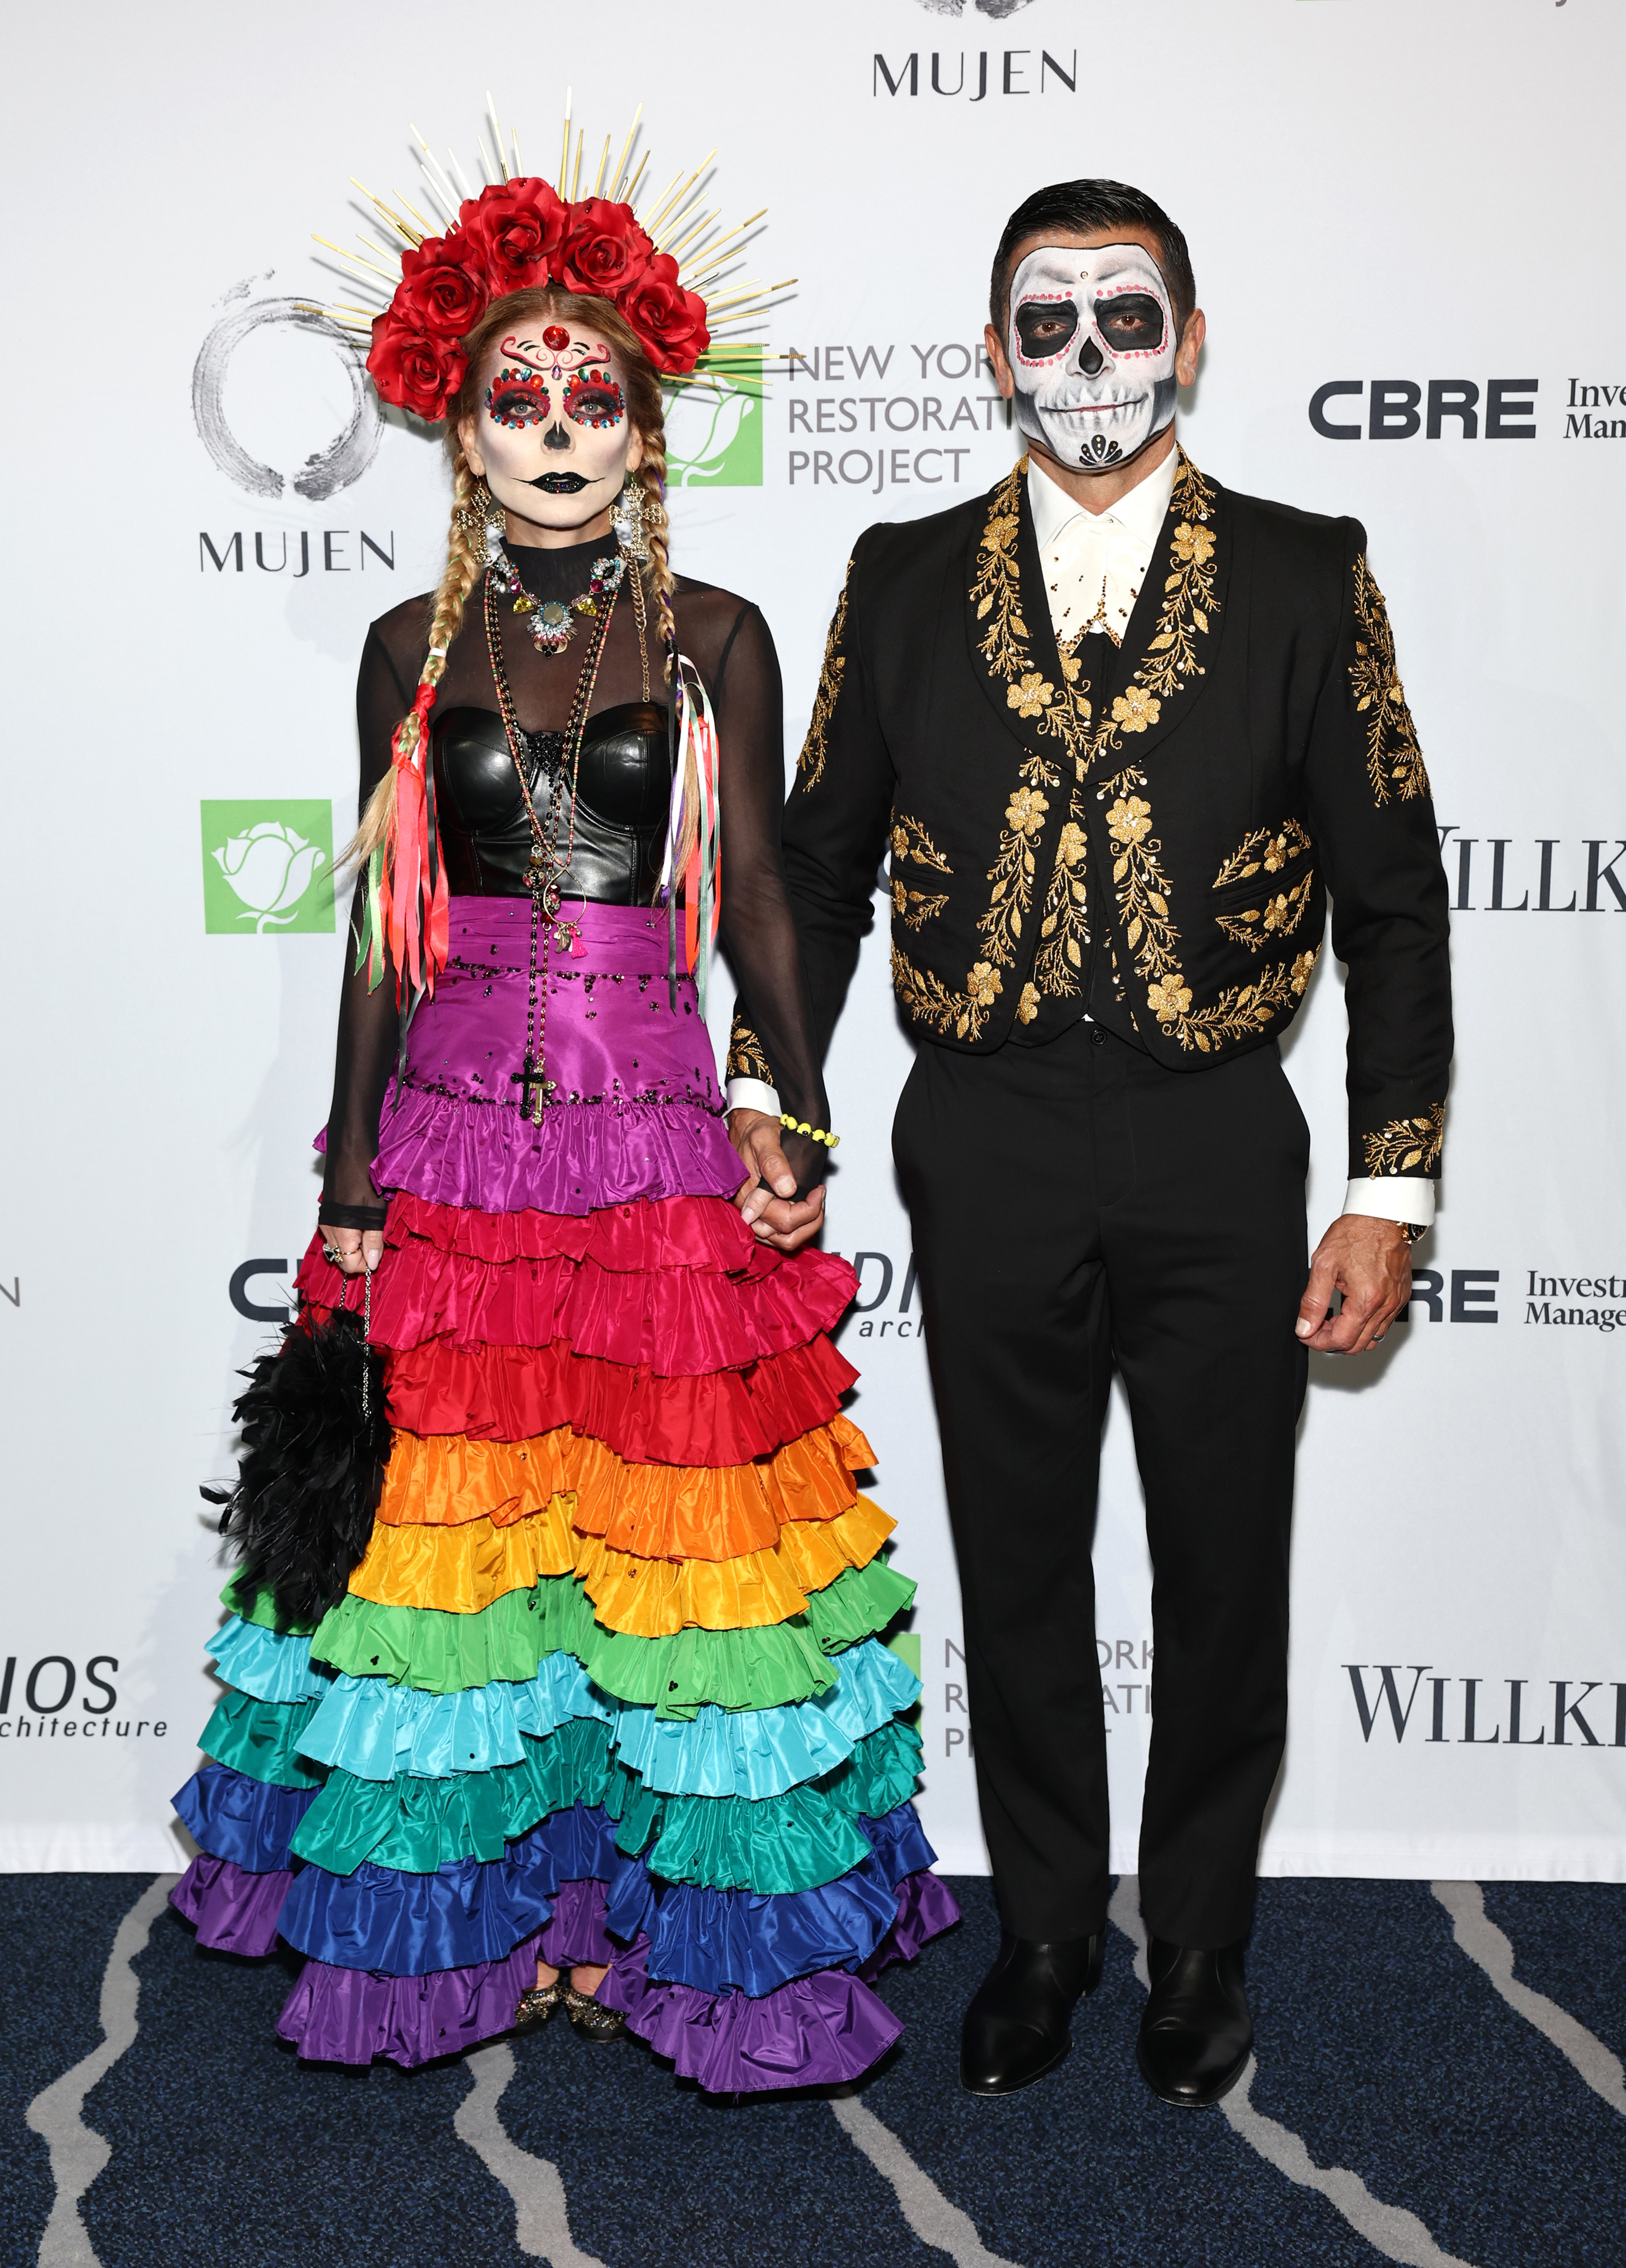 Kelly Ripa and Mark Consuelos in costume